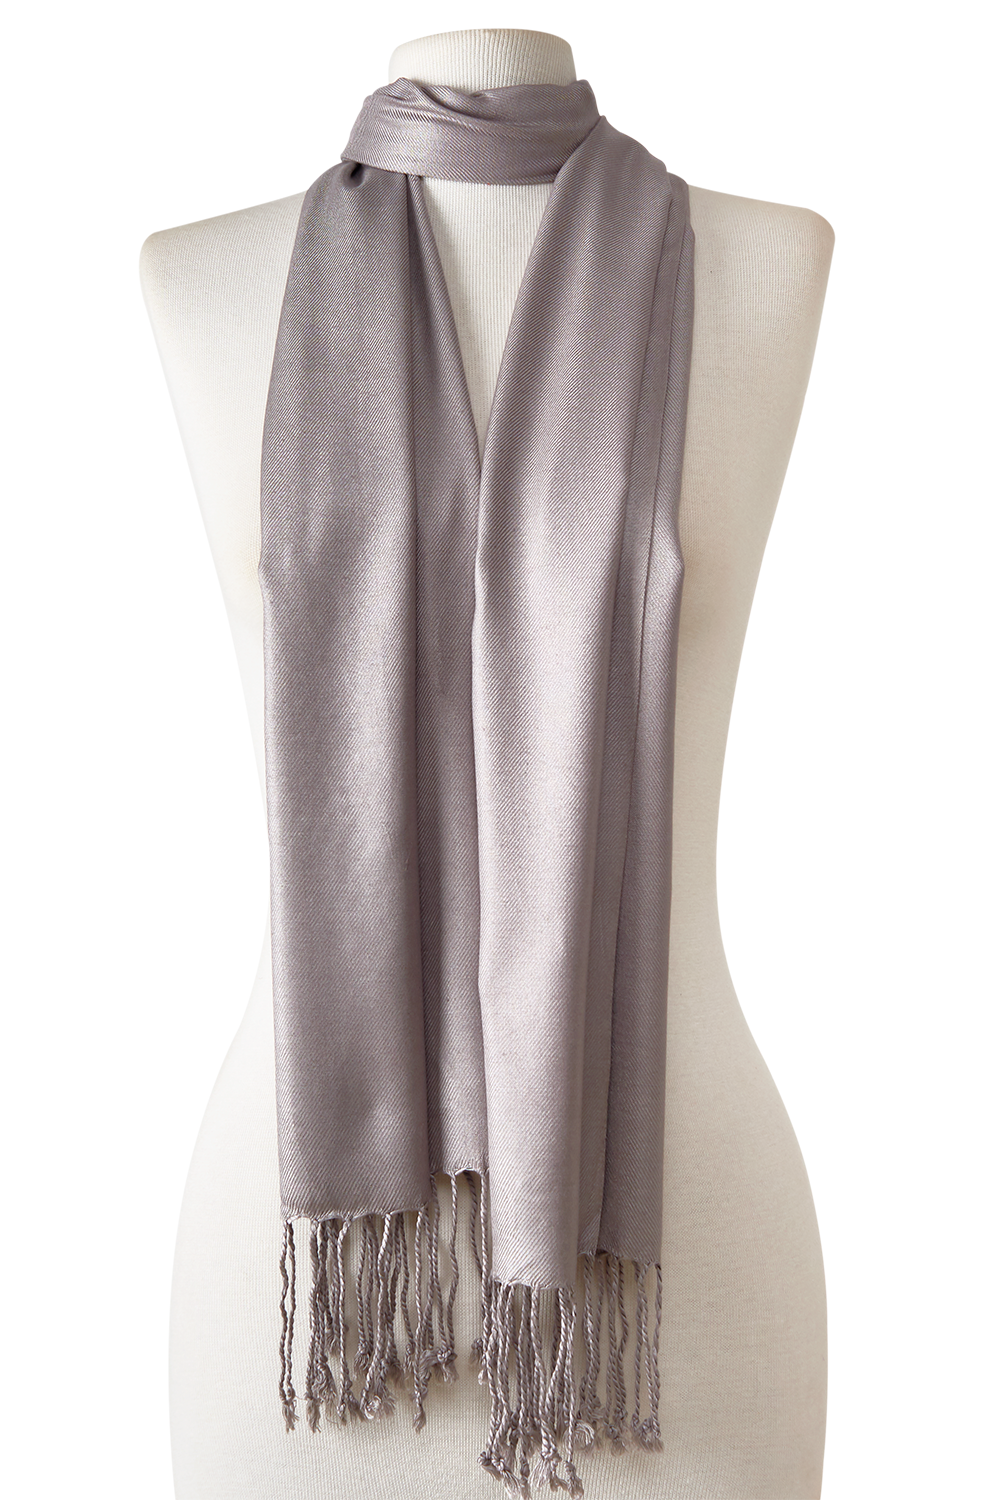 pashmina cachecol de viscose cinza scarf me 35x180cm